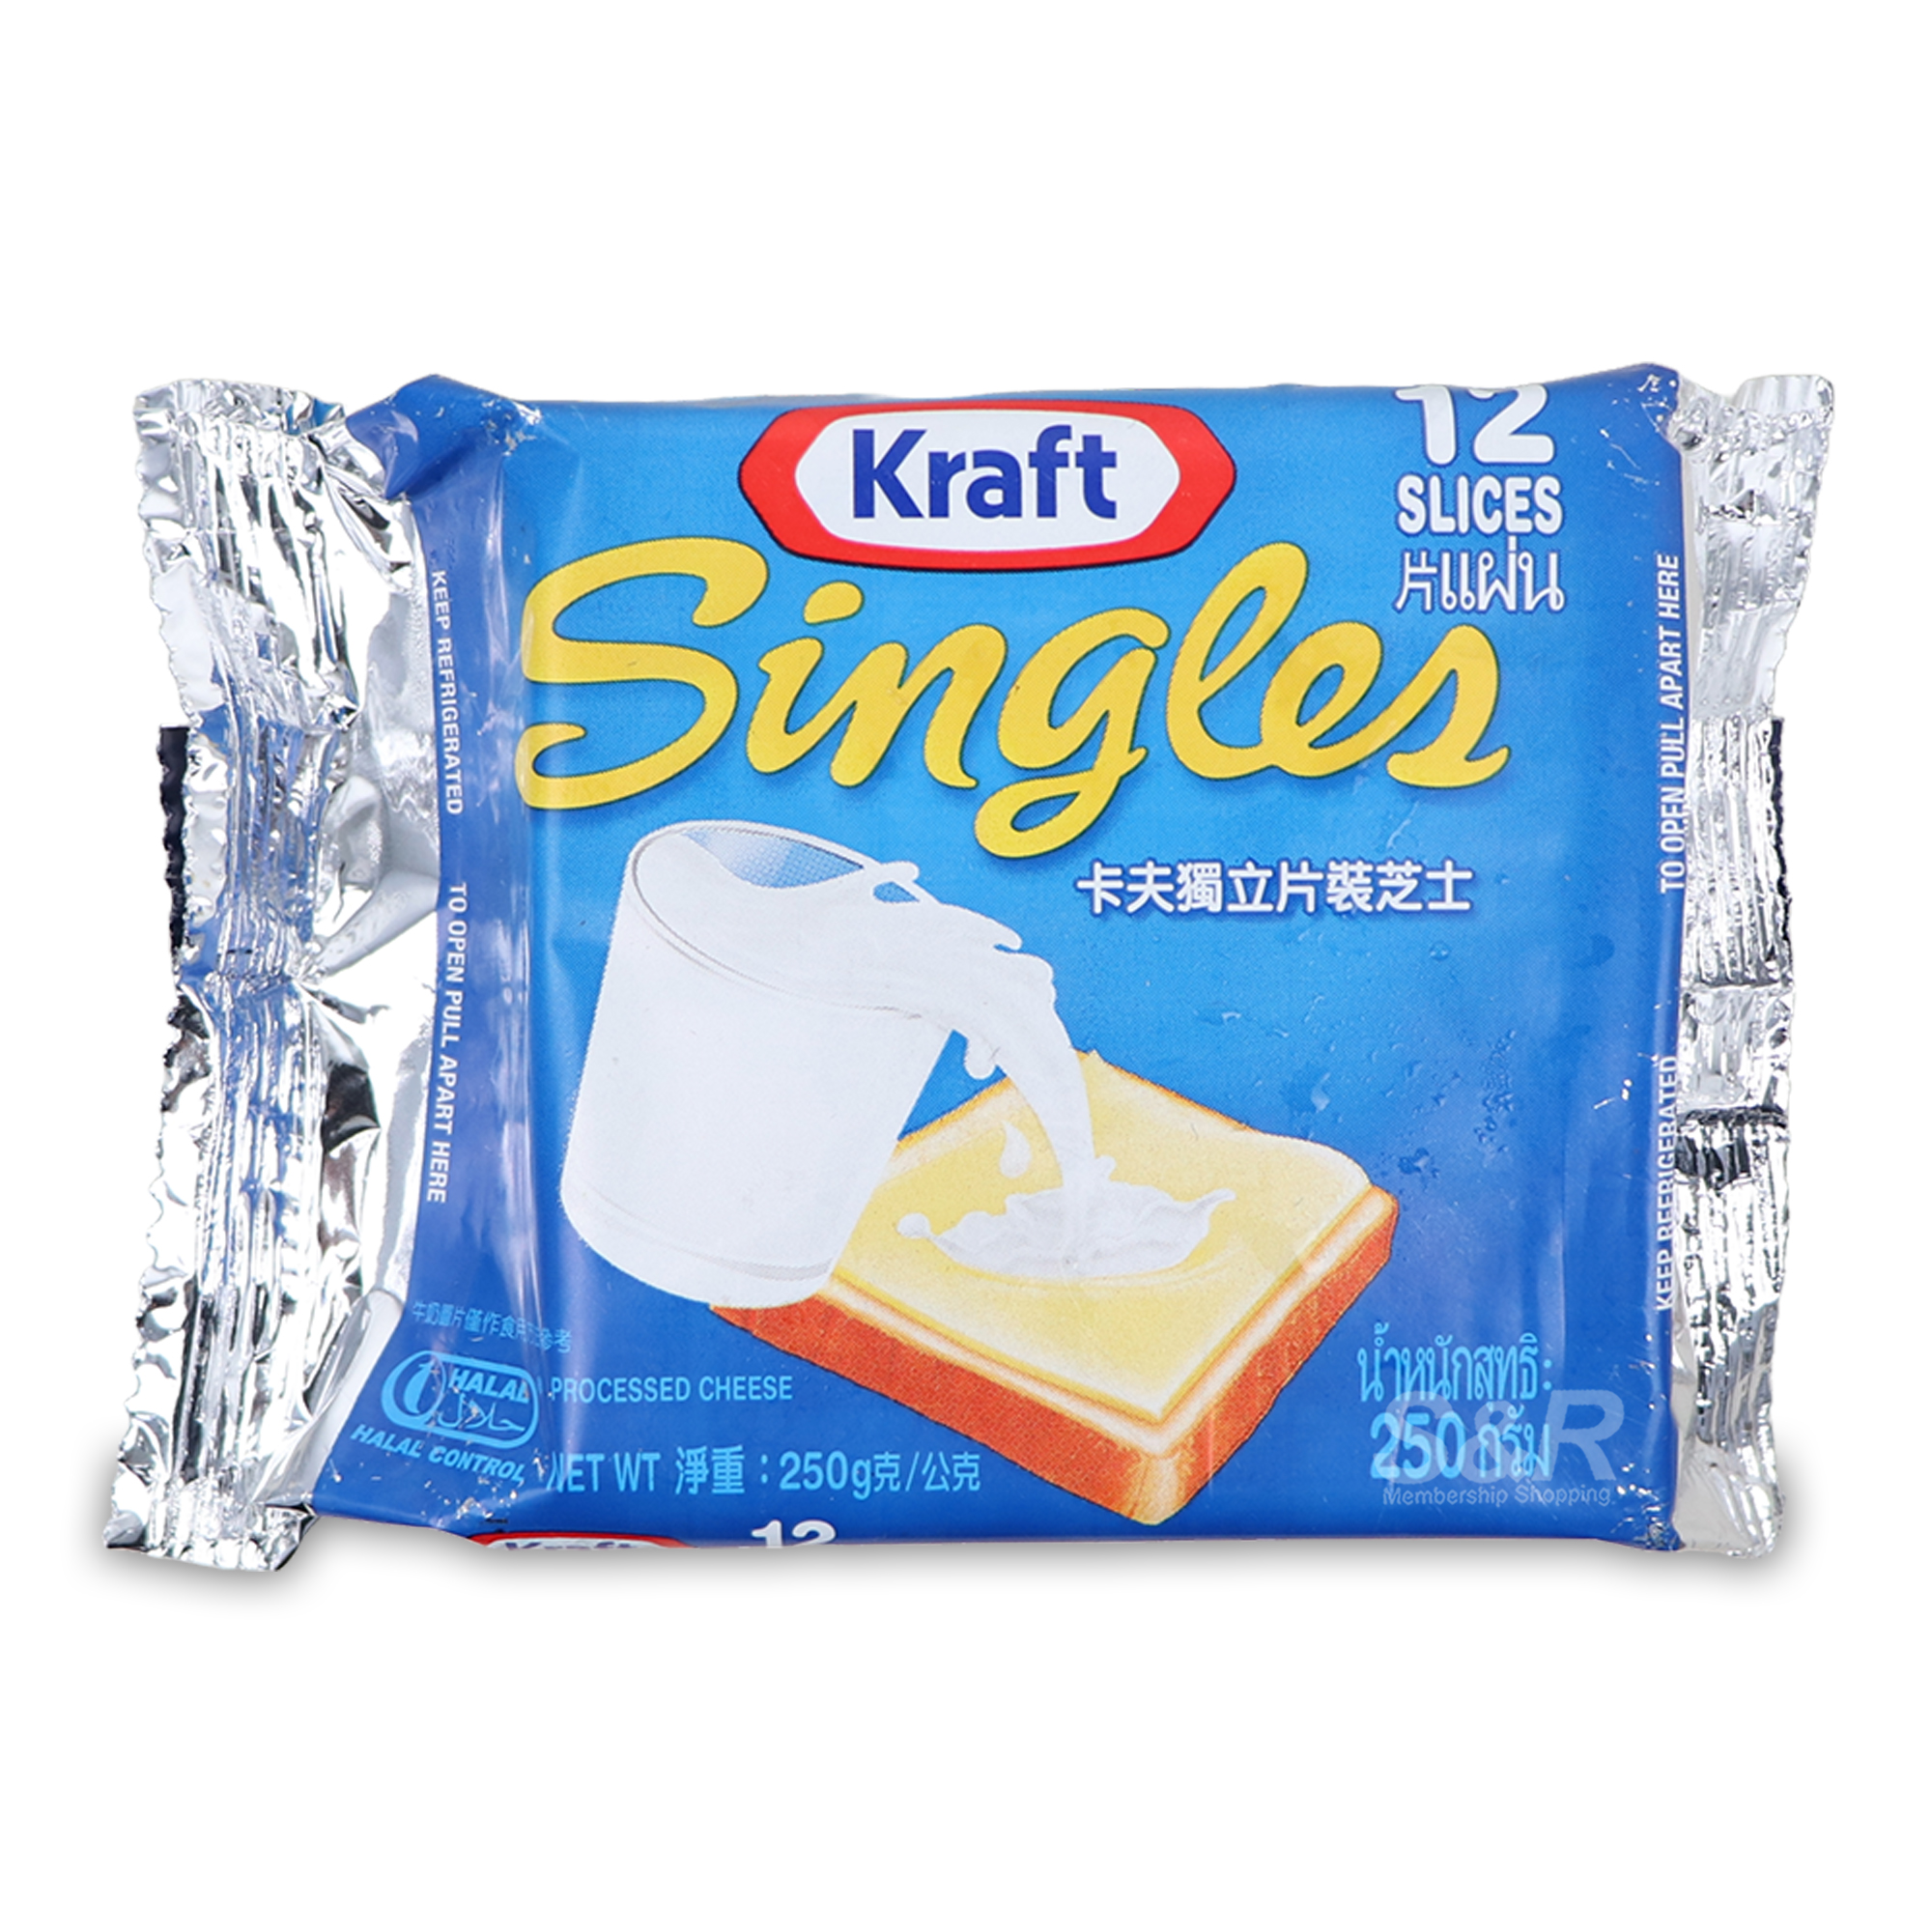 Kraft Singles Cheese Slices 12pcs